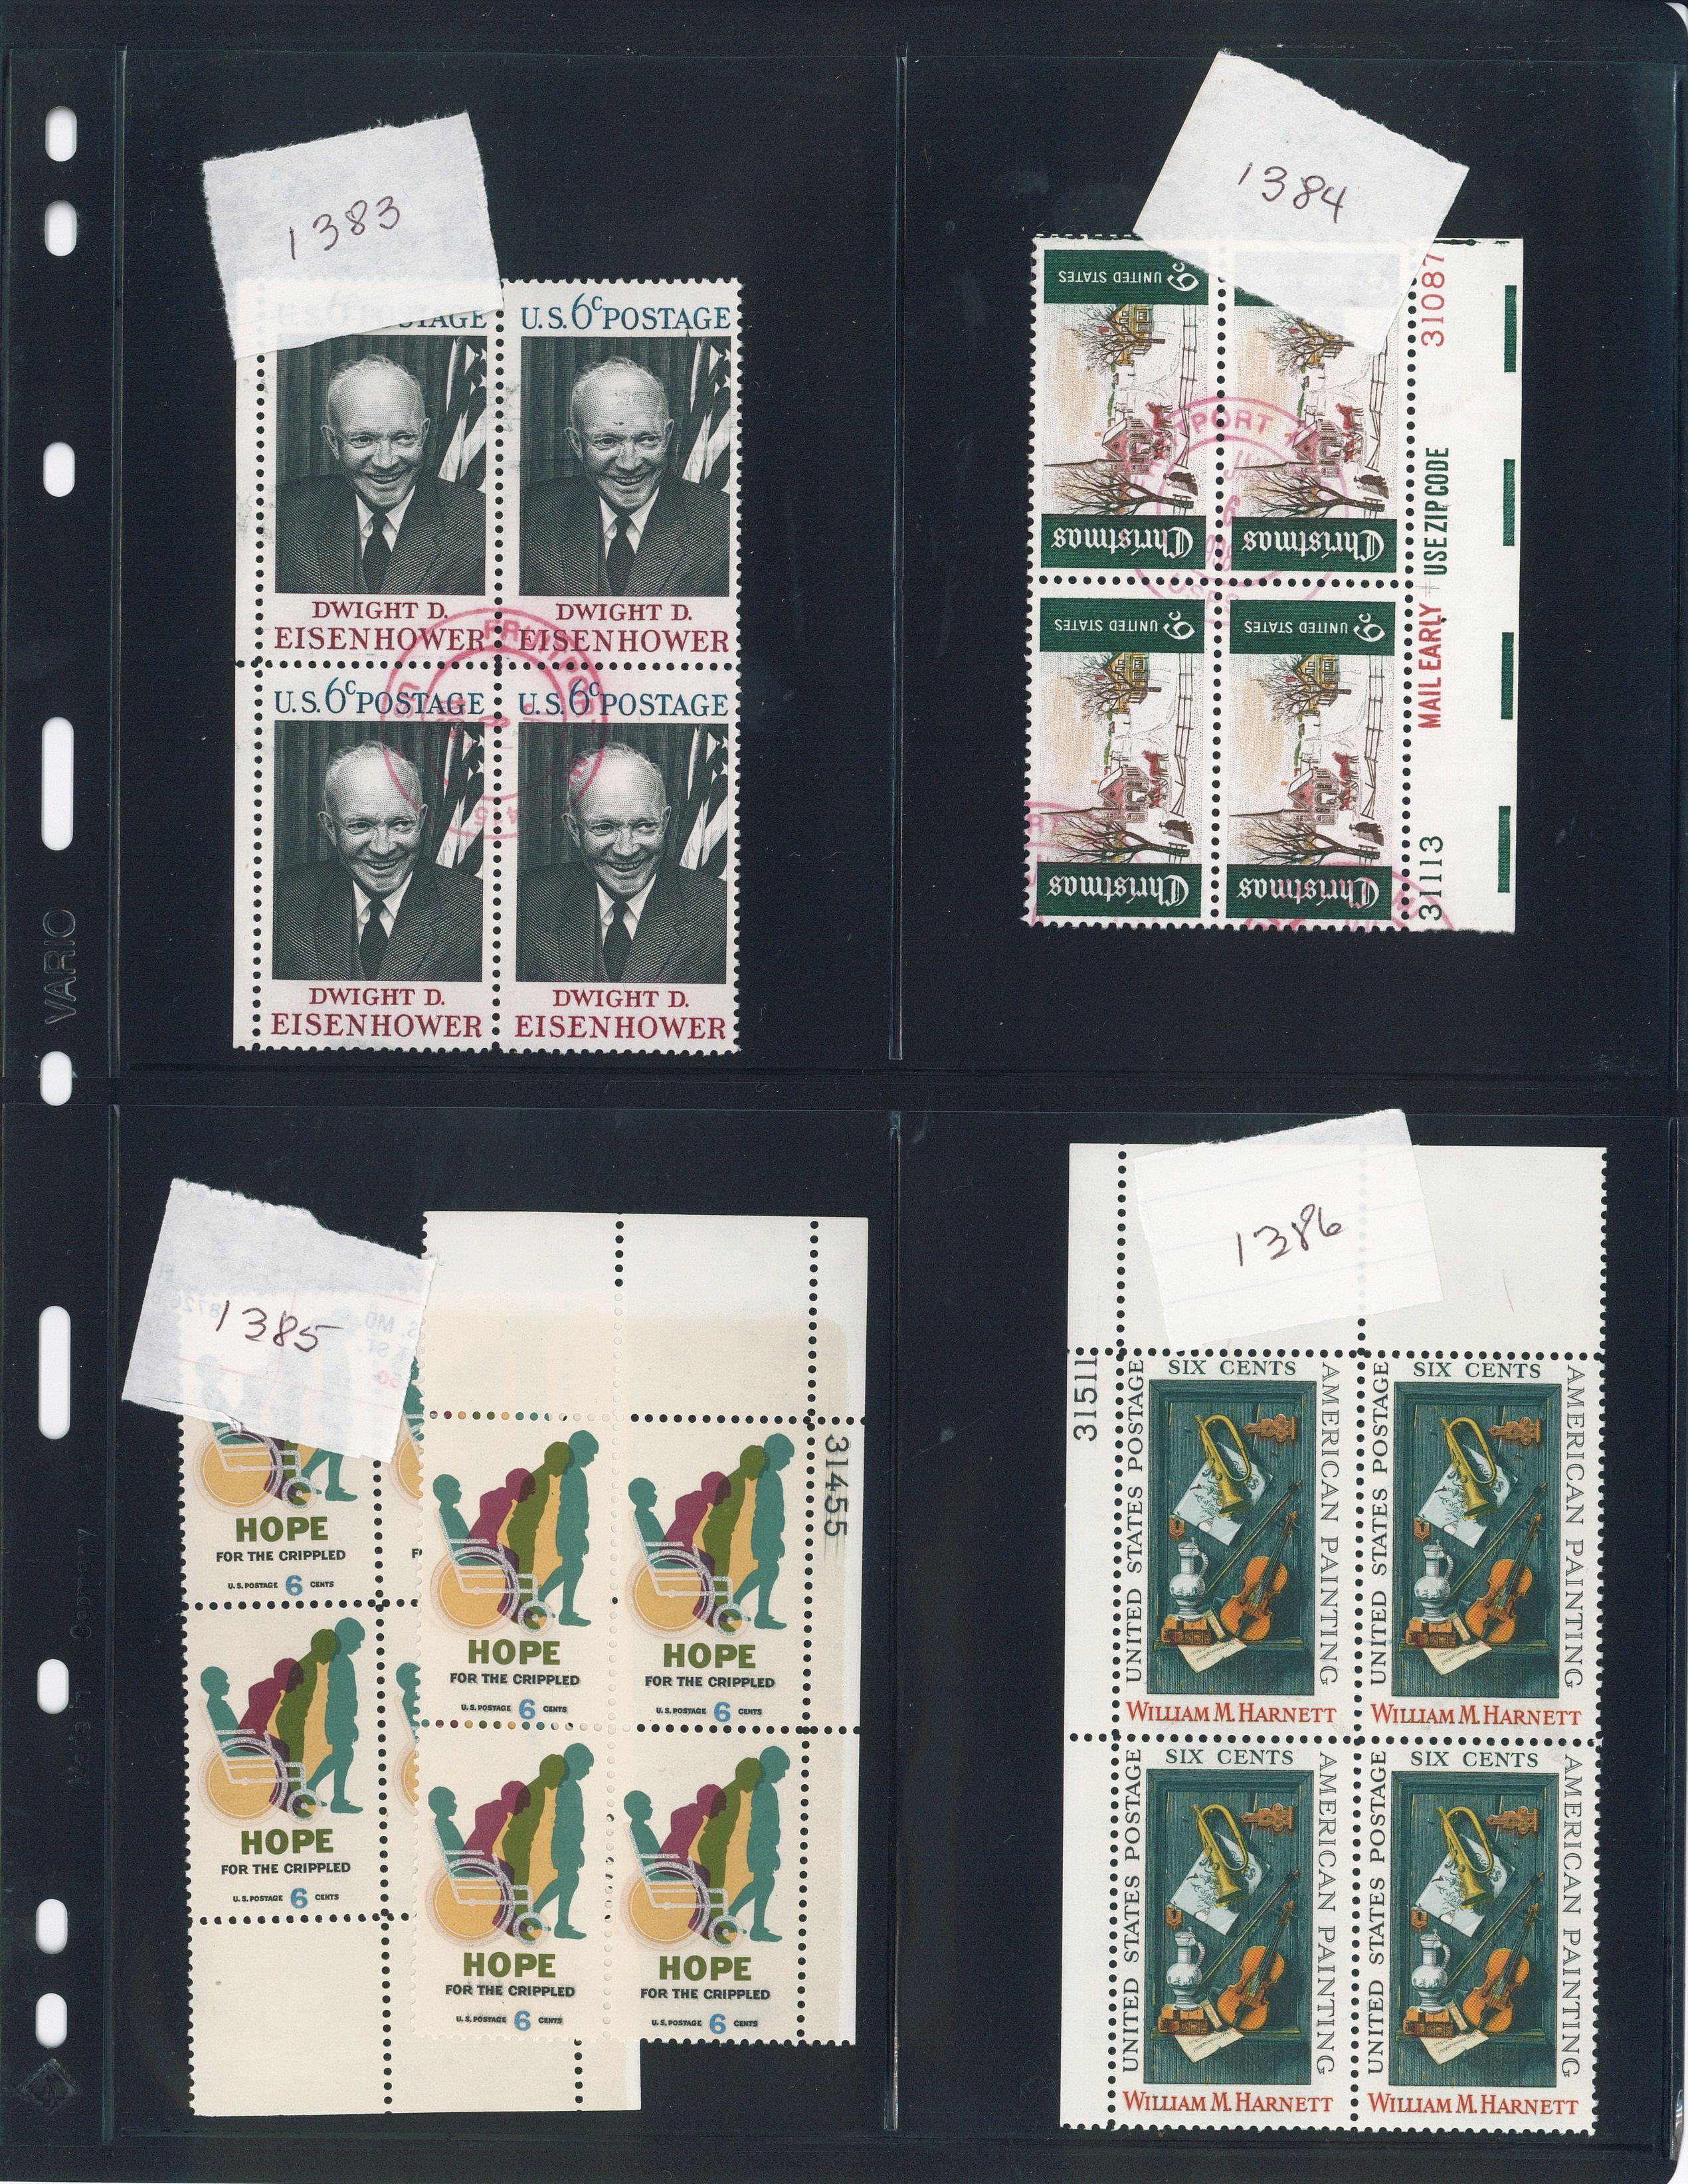 Assortment of USA Stamps (Scott # range 1199-1596)